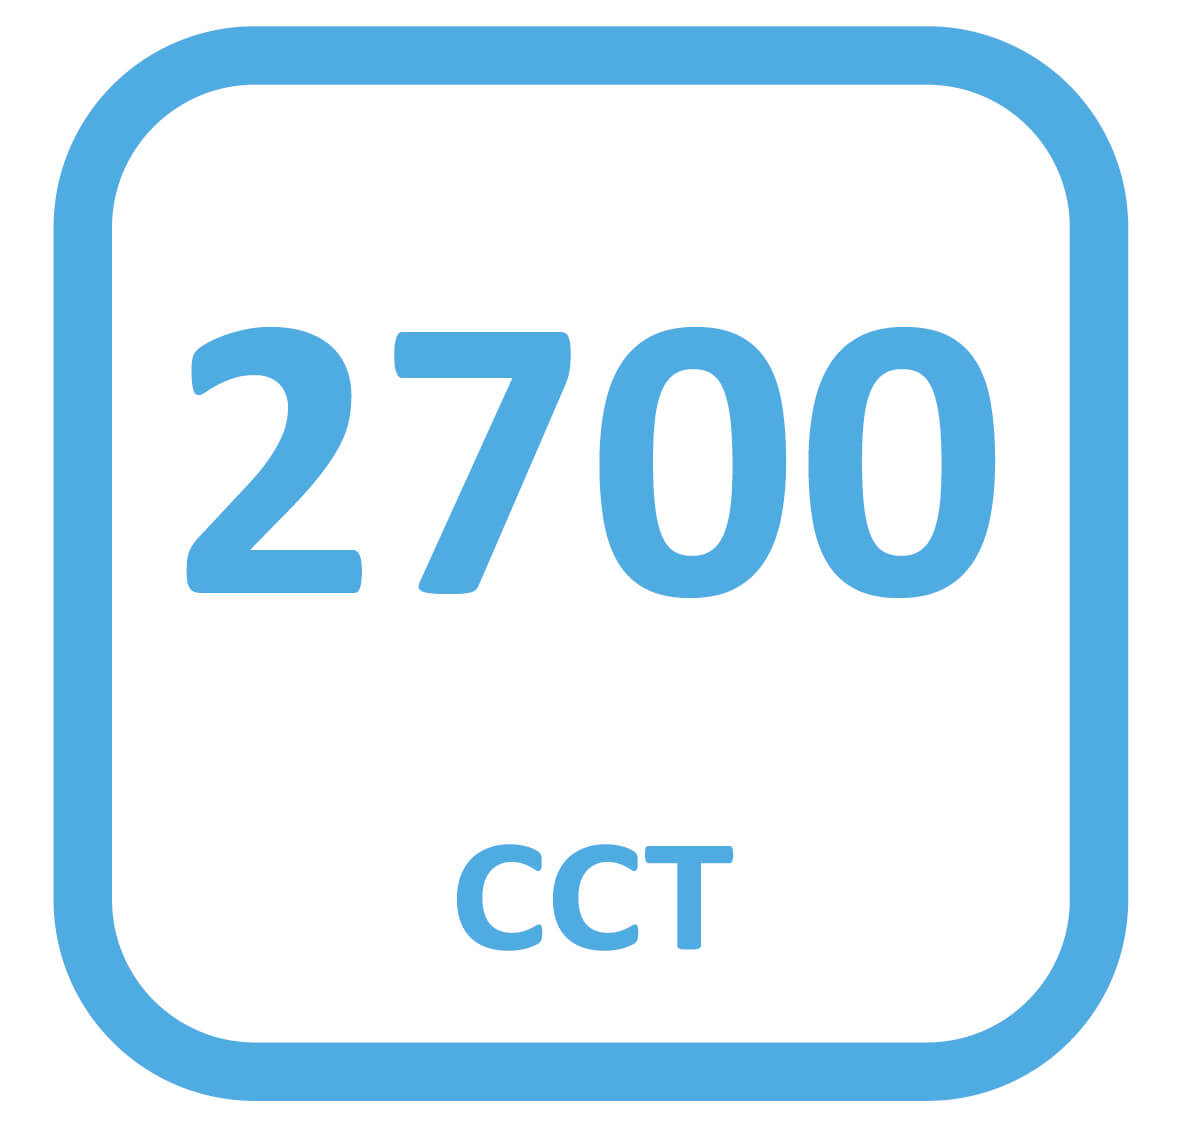 2700 CCT